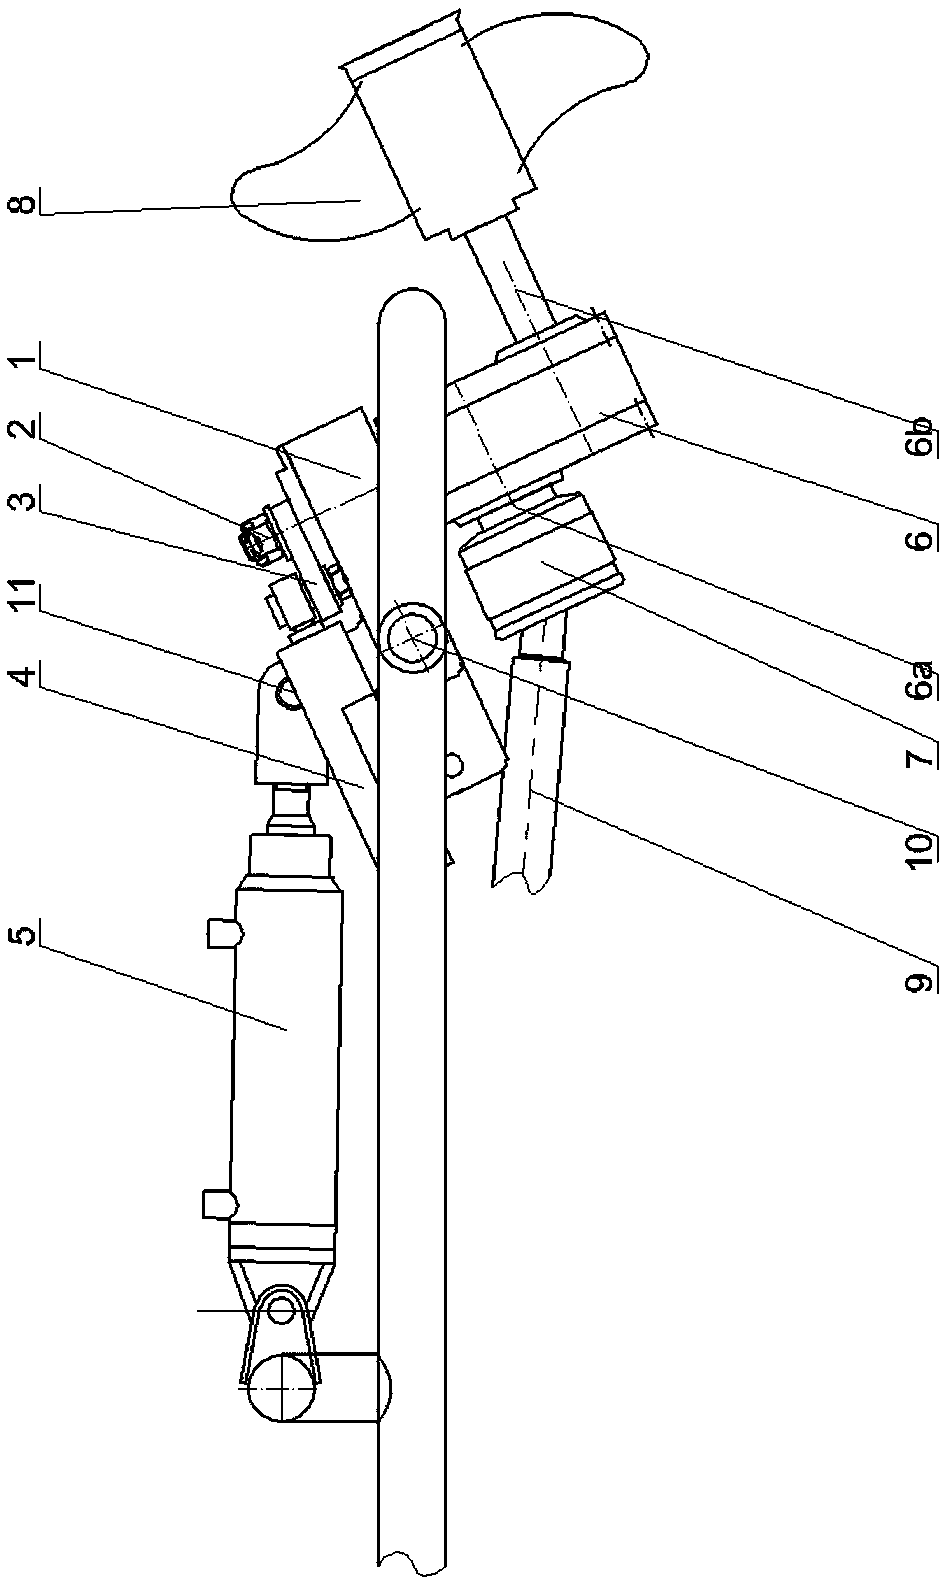 Folding propeller device